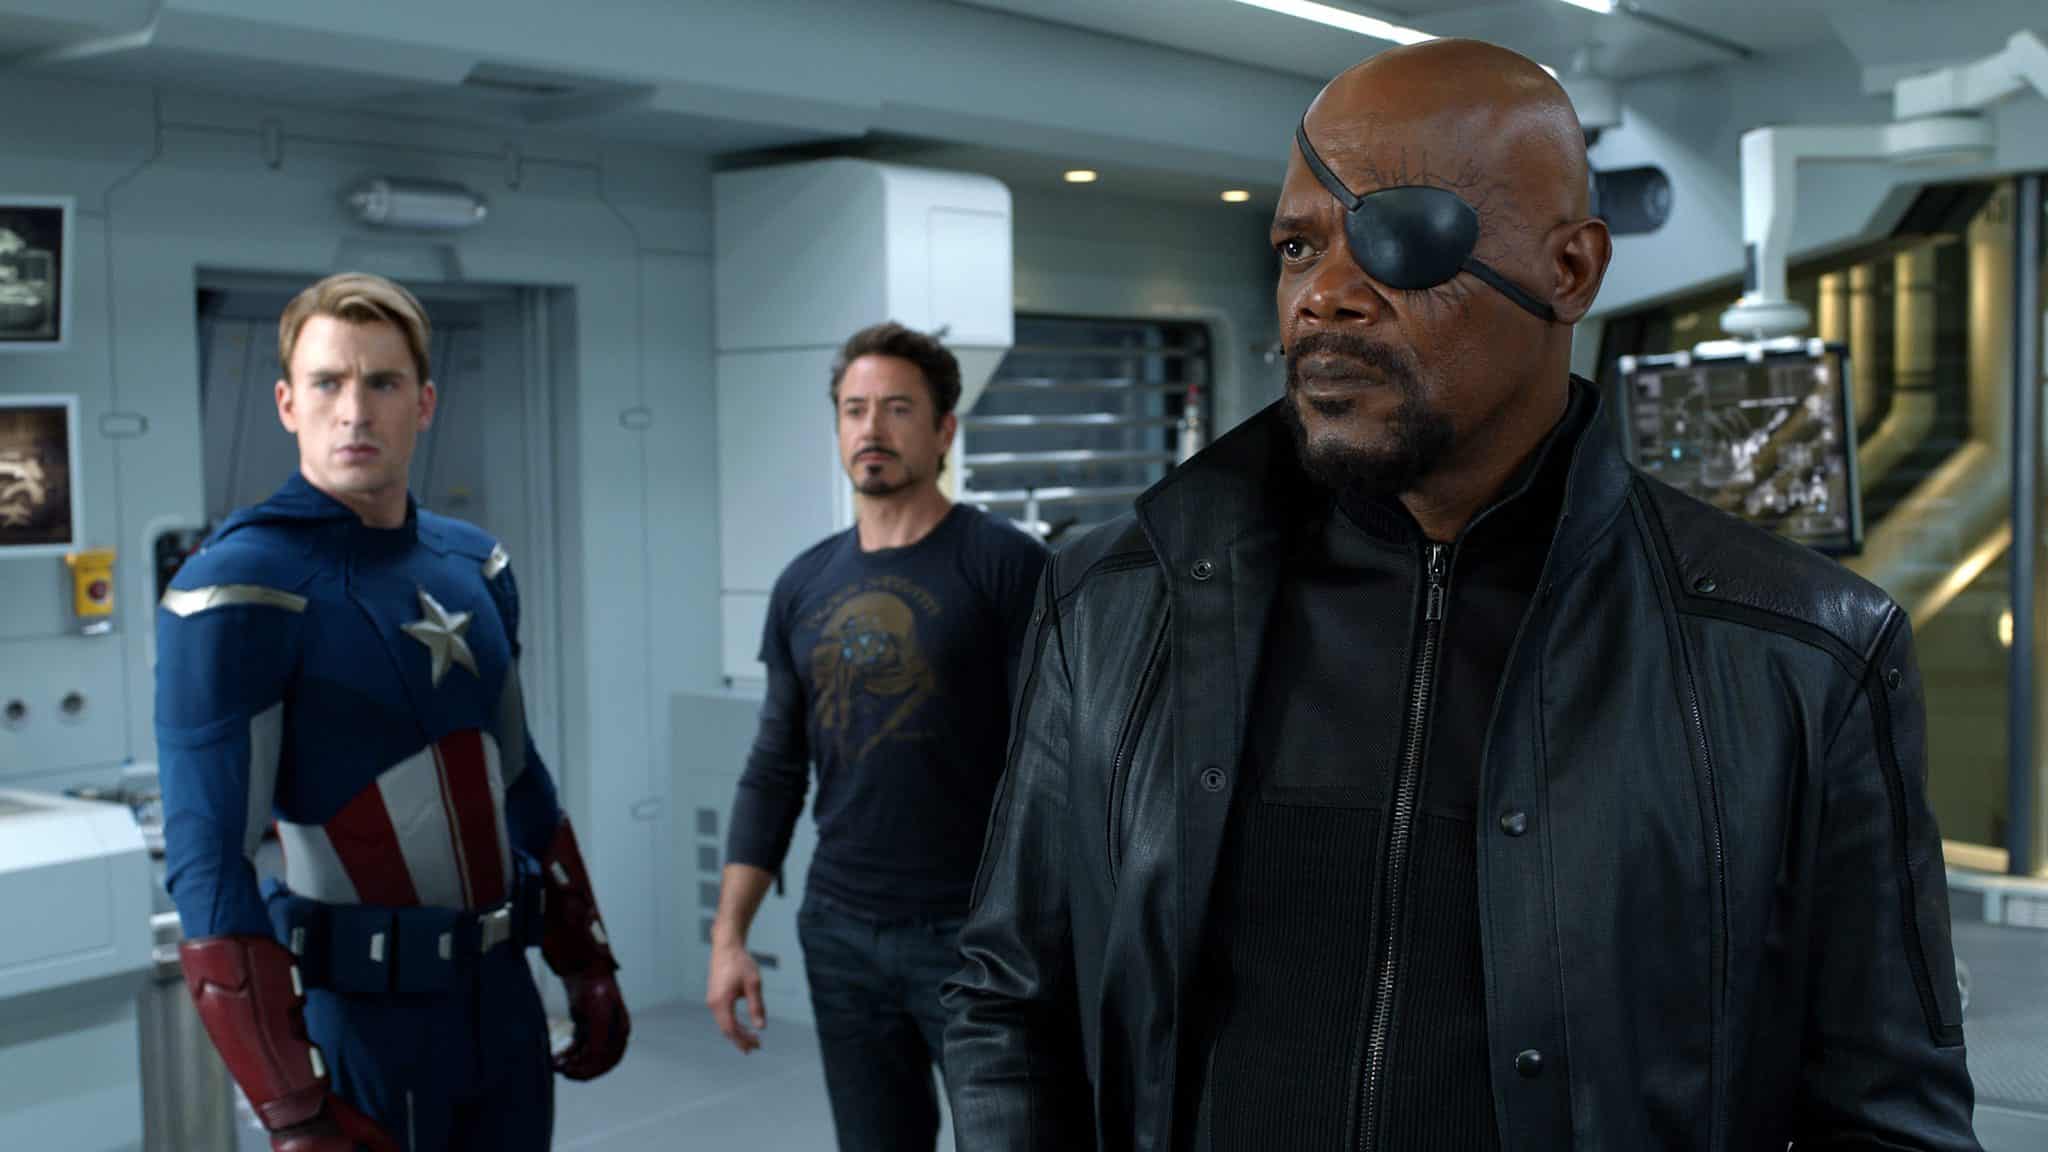 A still from 2012's Avengers featuring Chris Evans, Robert Downey Jr. and Samuel L. Jackson